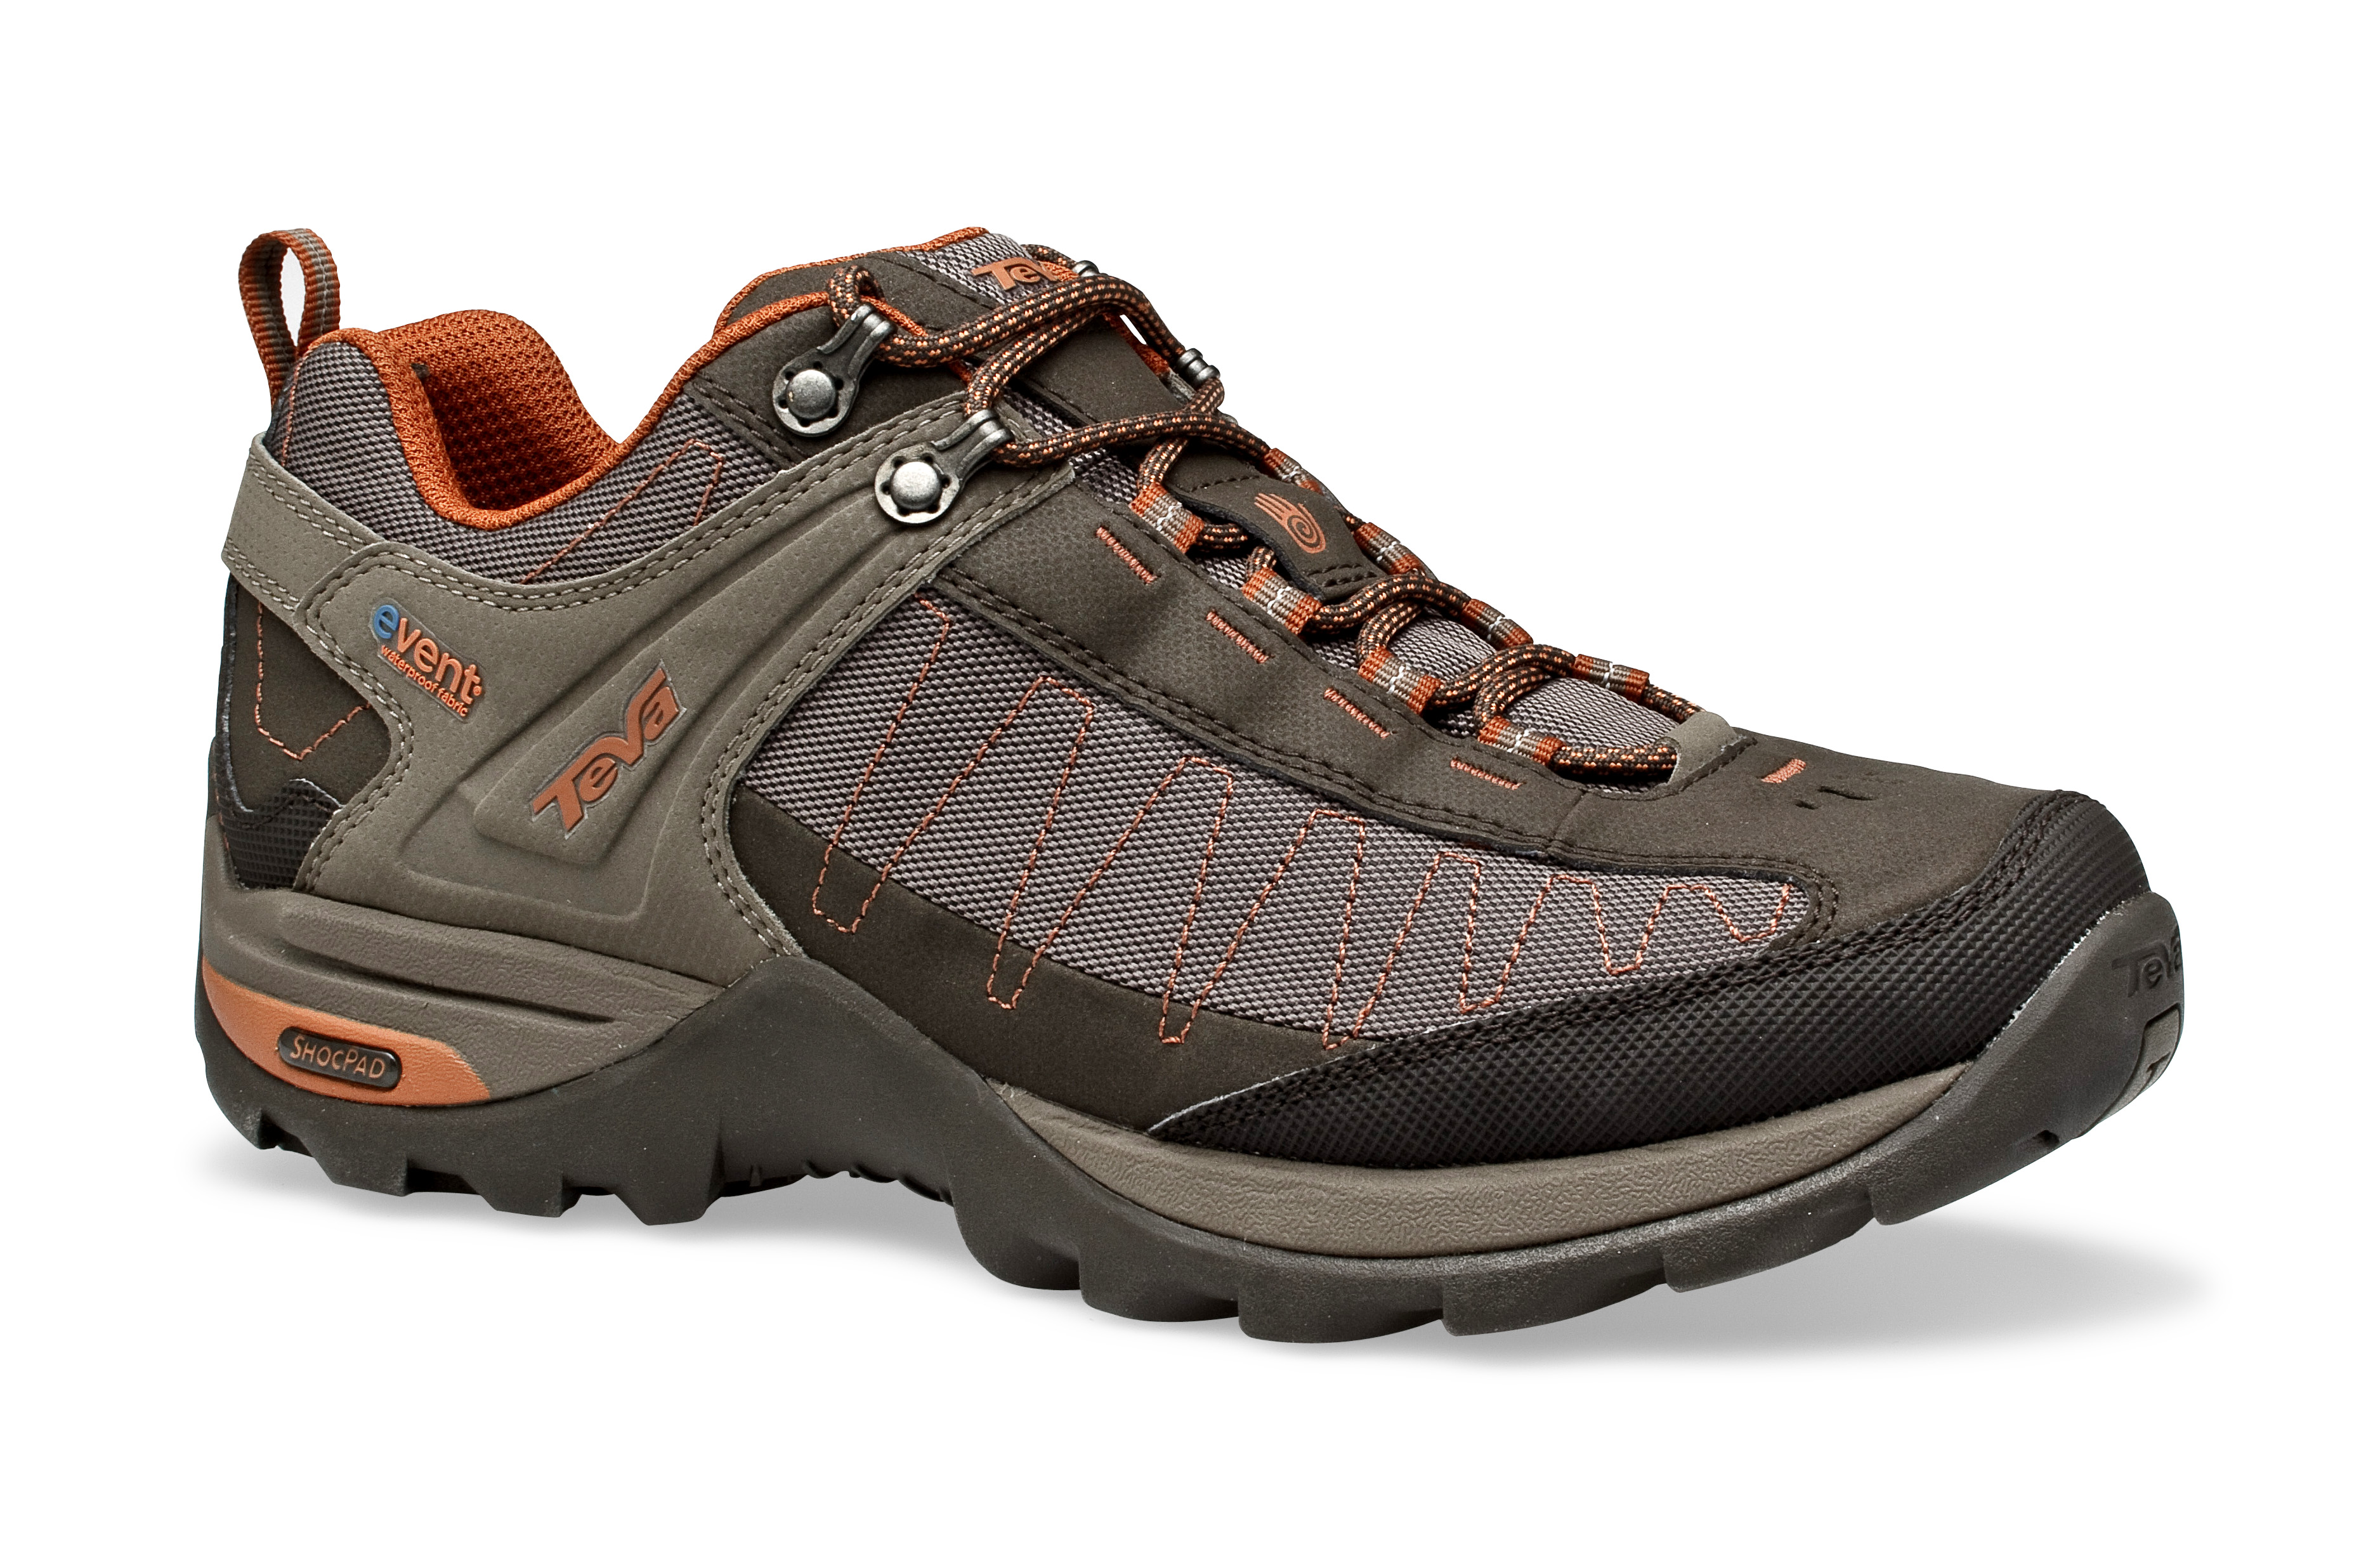 Men's Coastal Hiking Boots. Kimberfeel teram Hiking Boots. Topseller Pro. Купить мужские кроссовки в гомеле